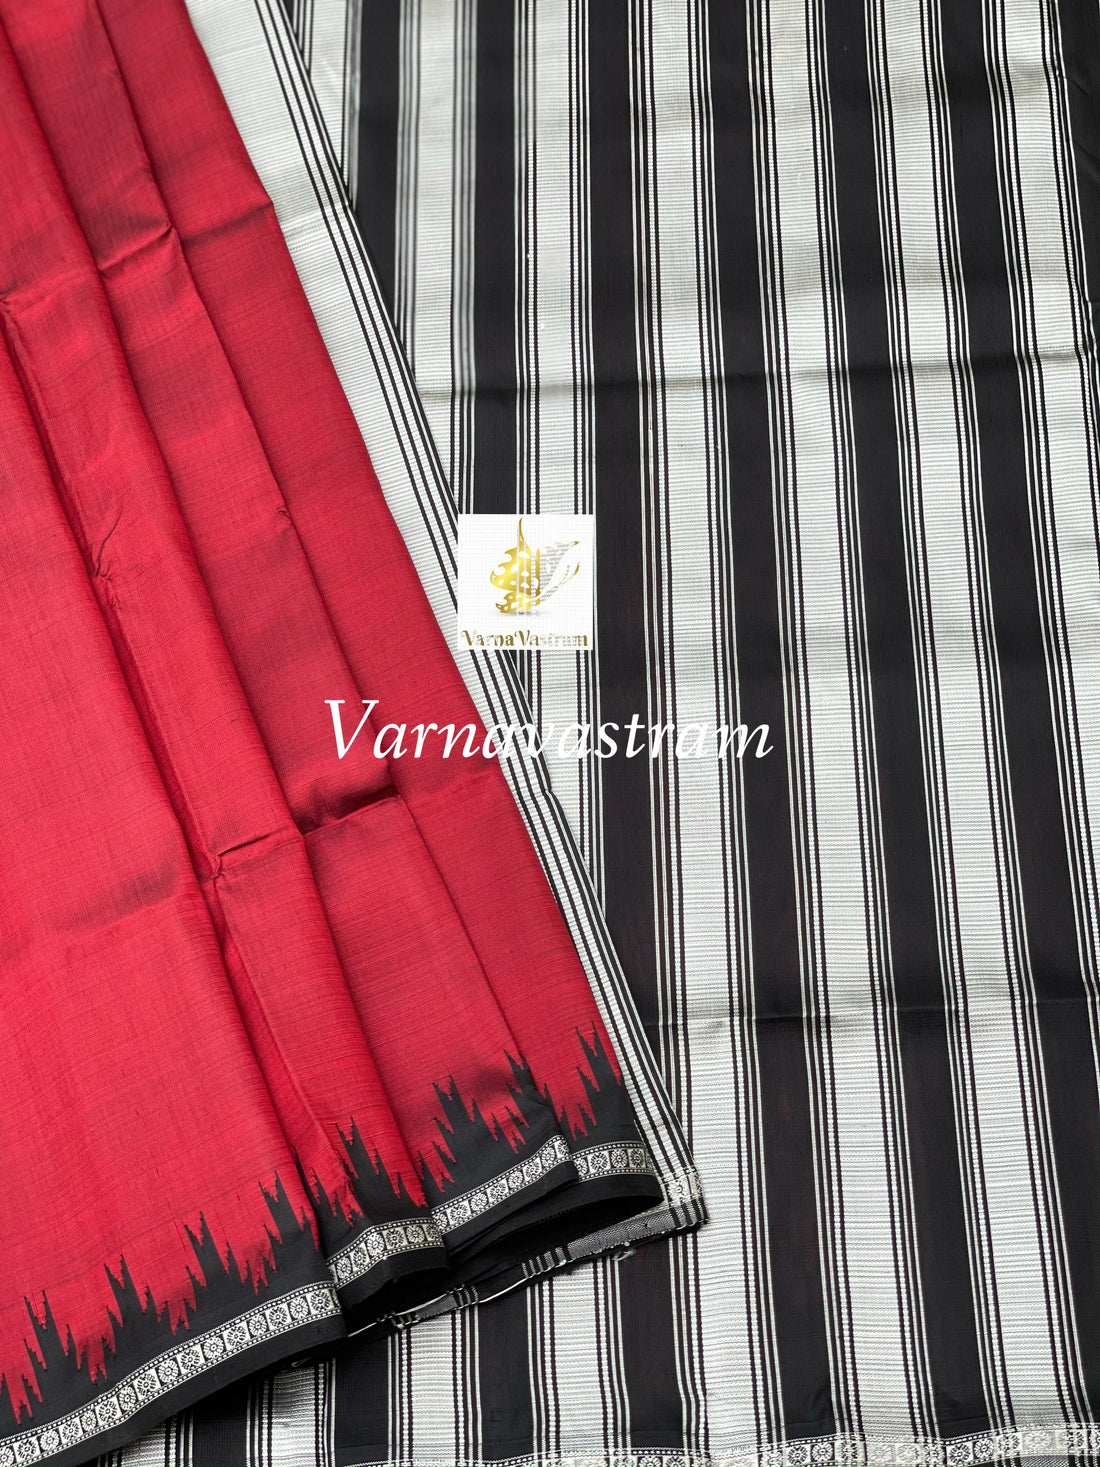 Berhampuri patta Silk saree from Odisha Weave